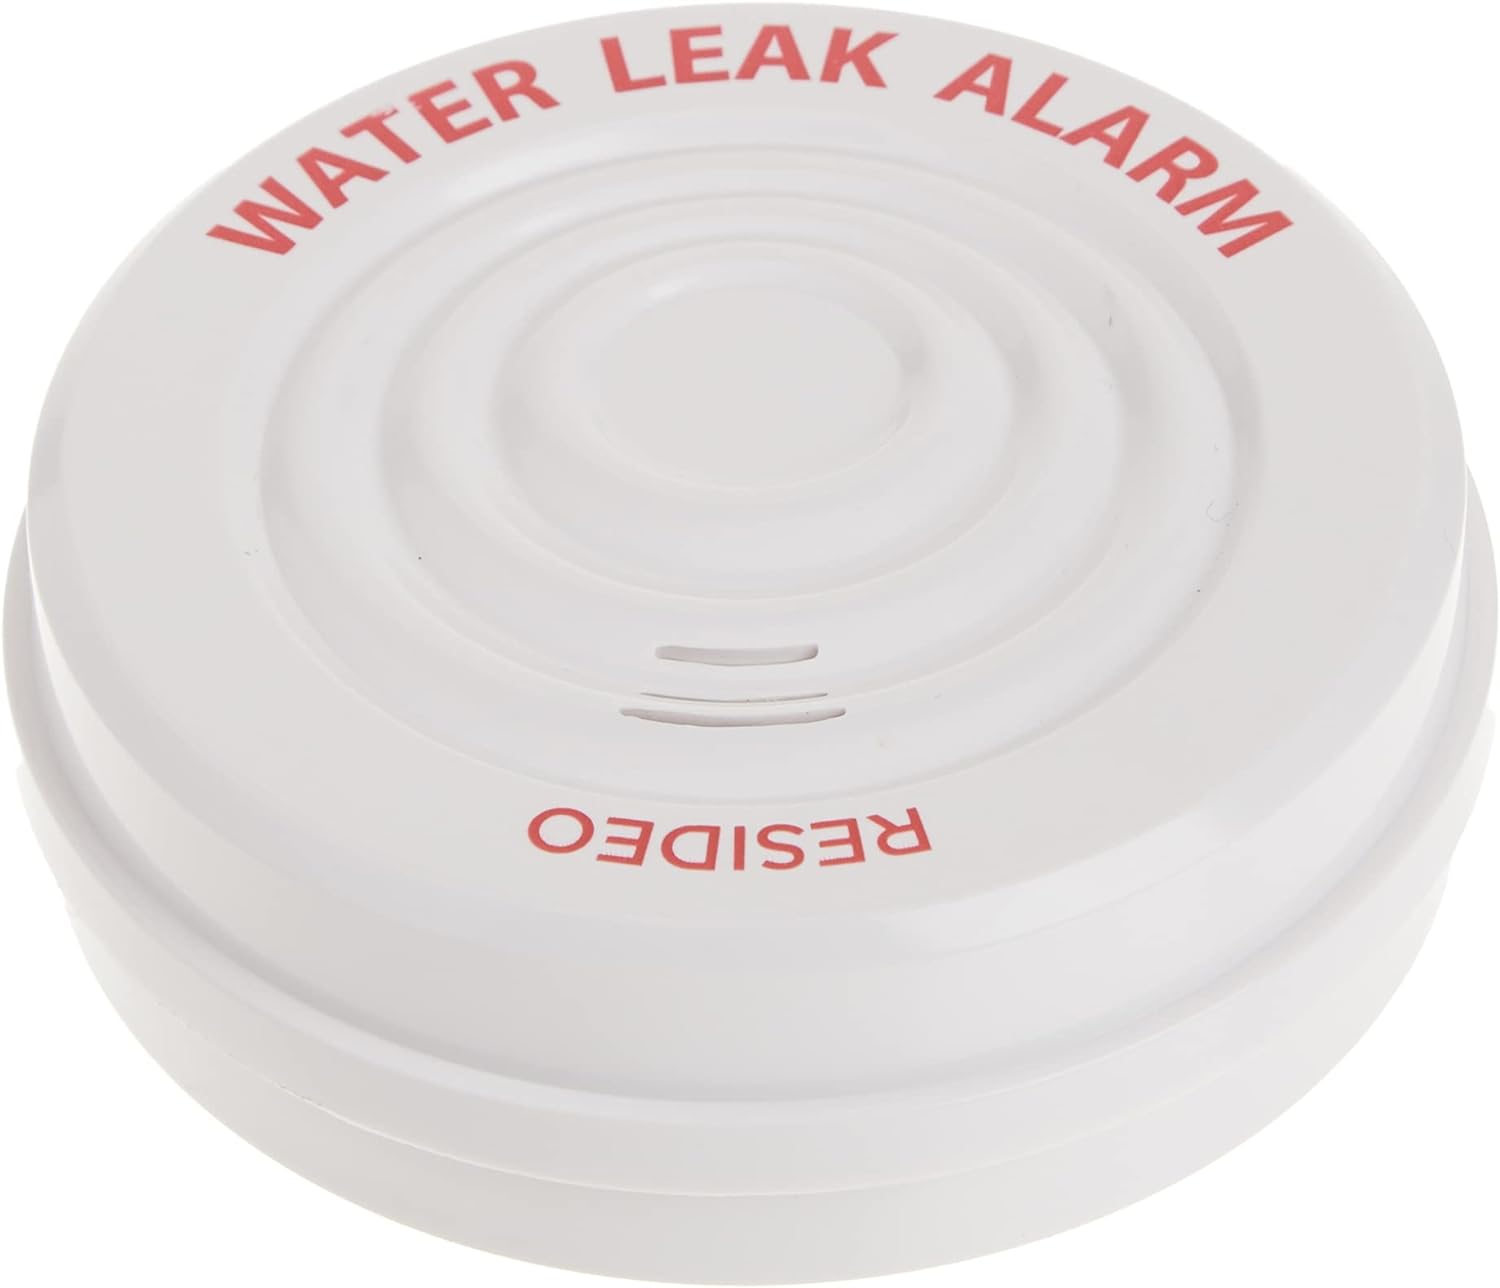 Honeywell Resideo RWD21 Reusable Water Leak Alarm